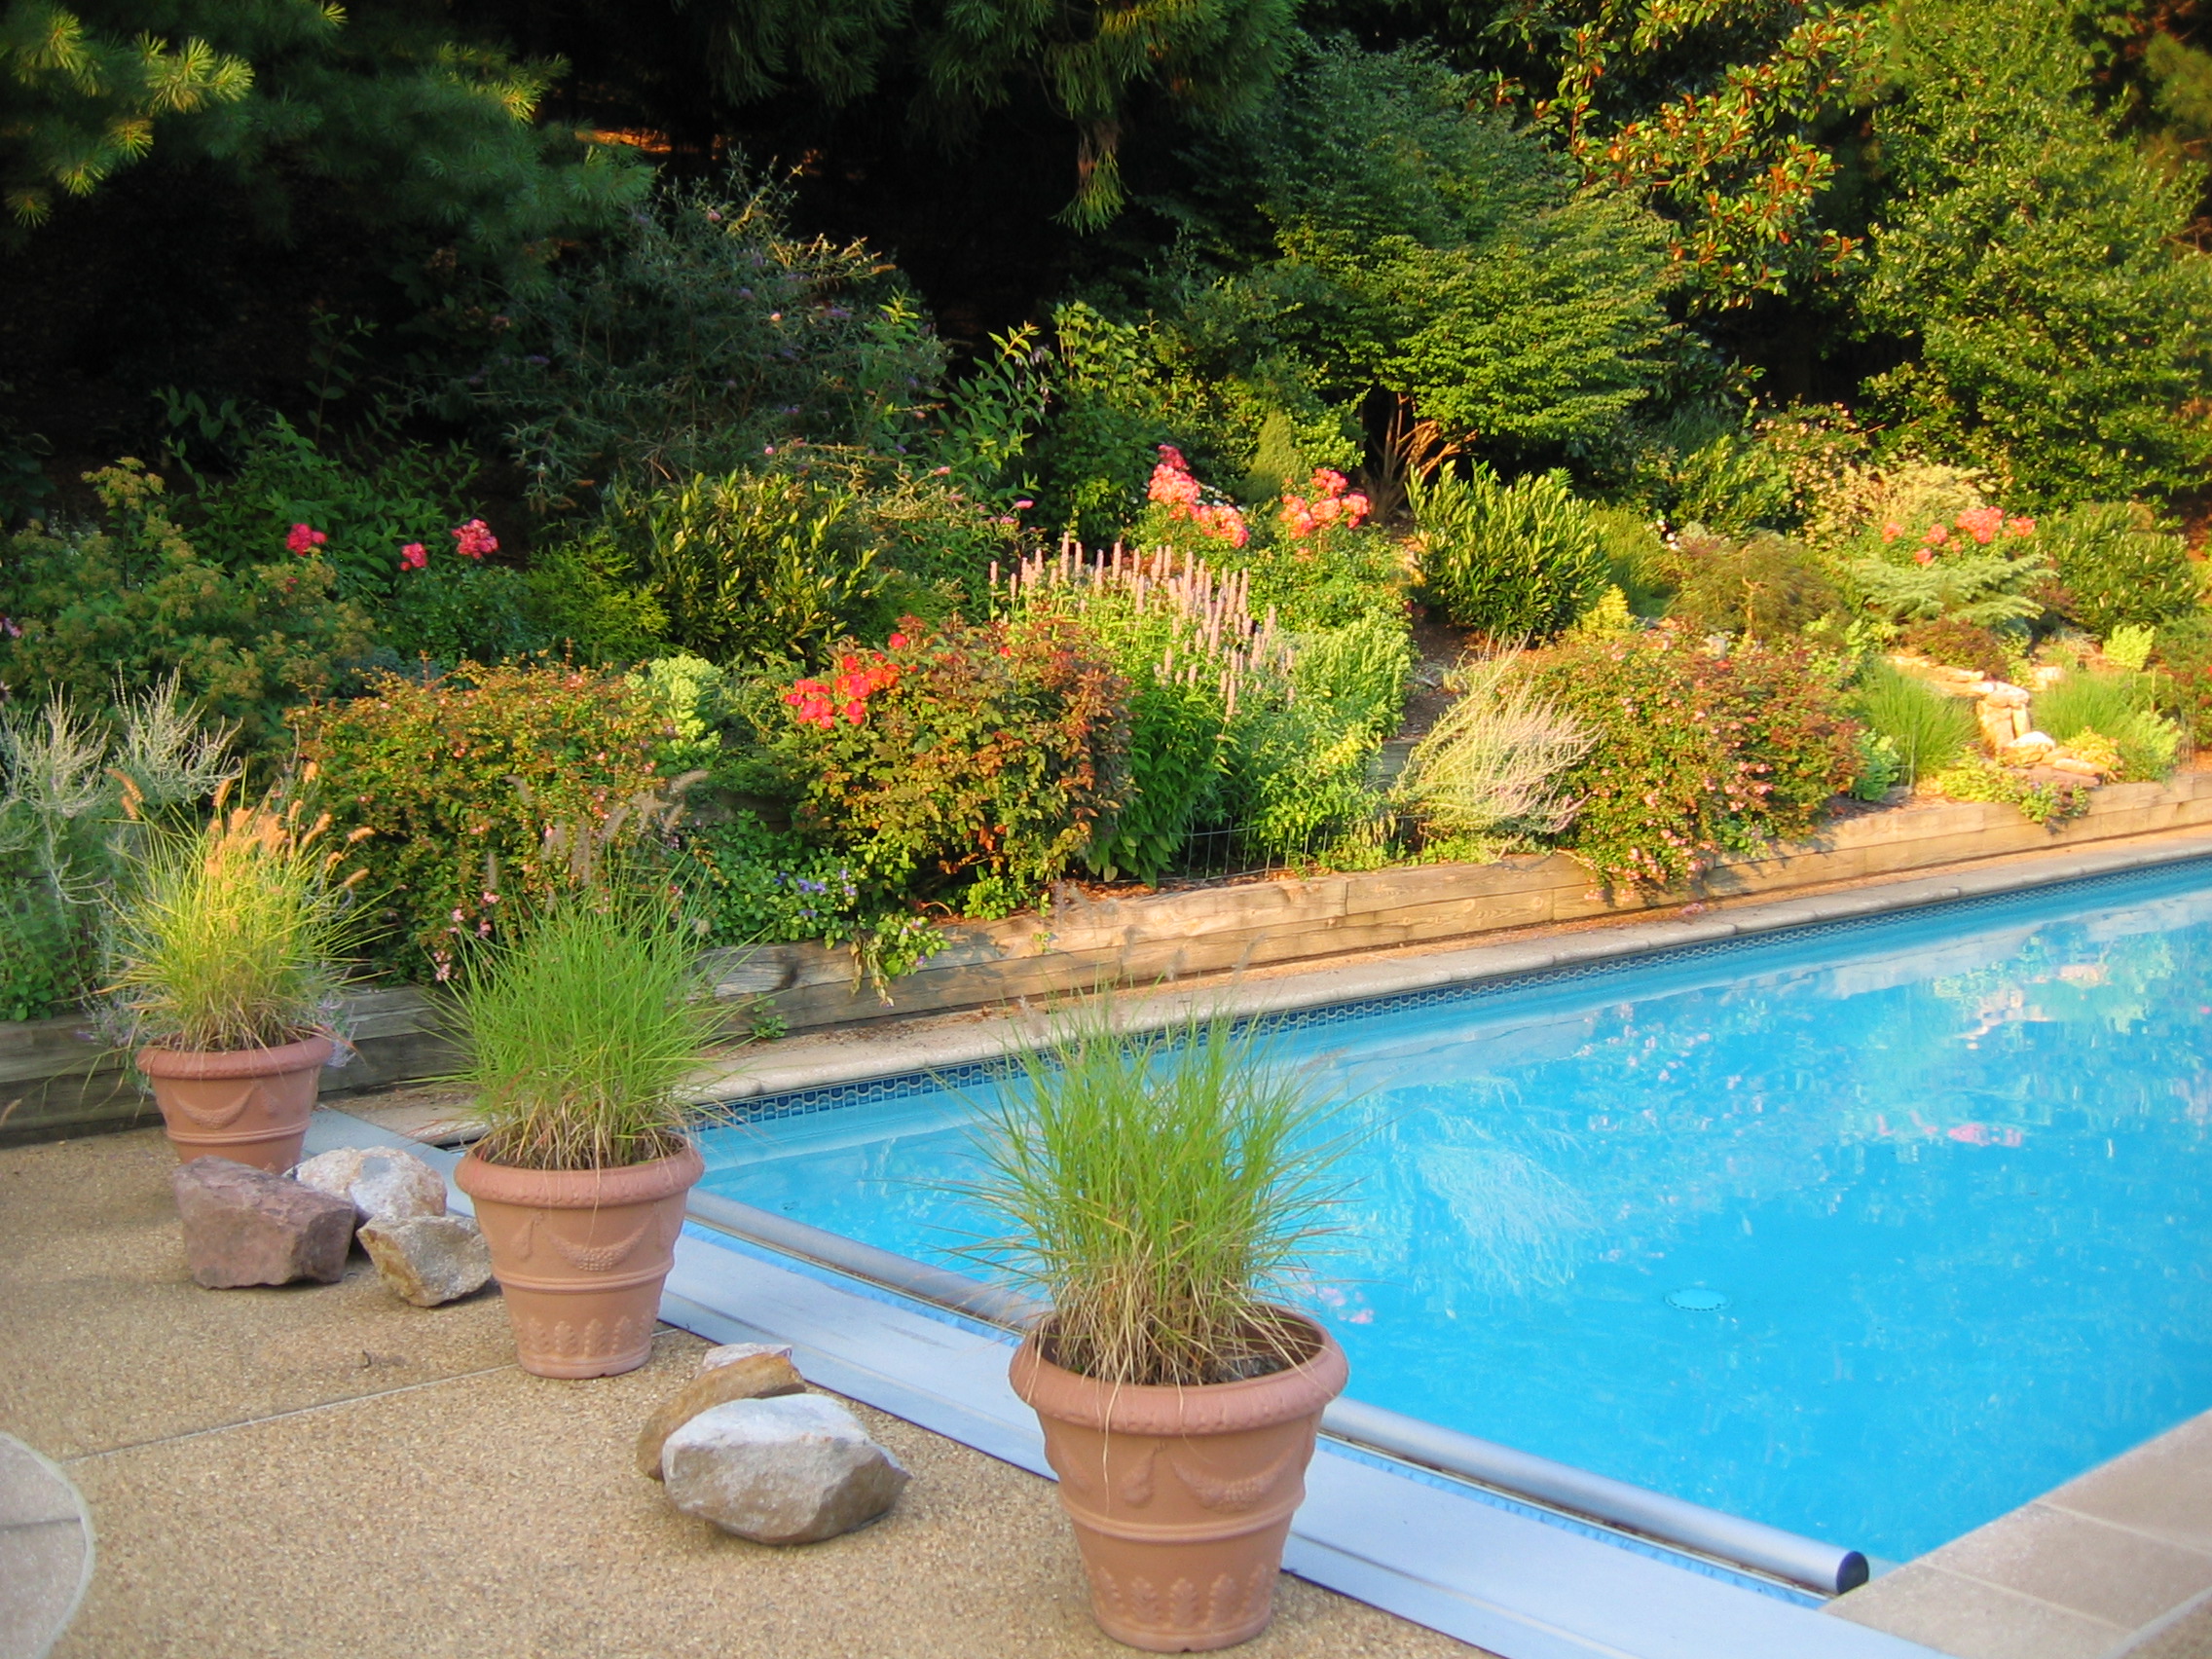 Back yard pool and plantings